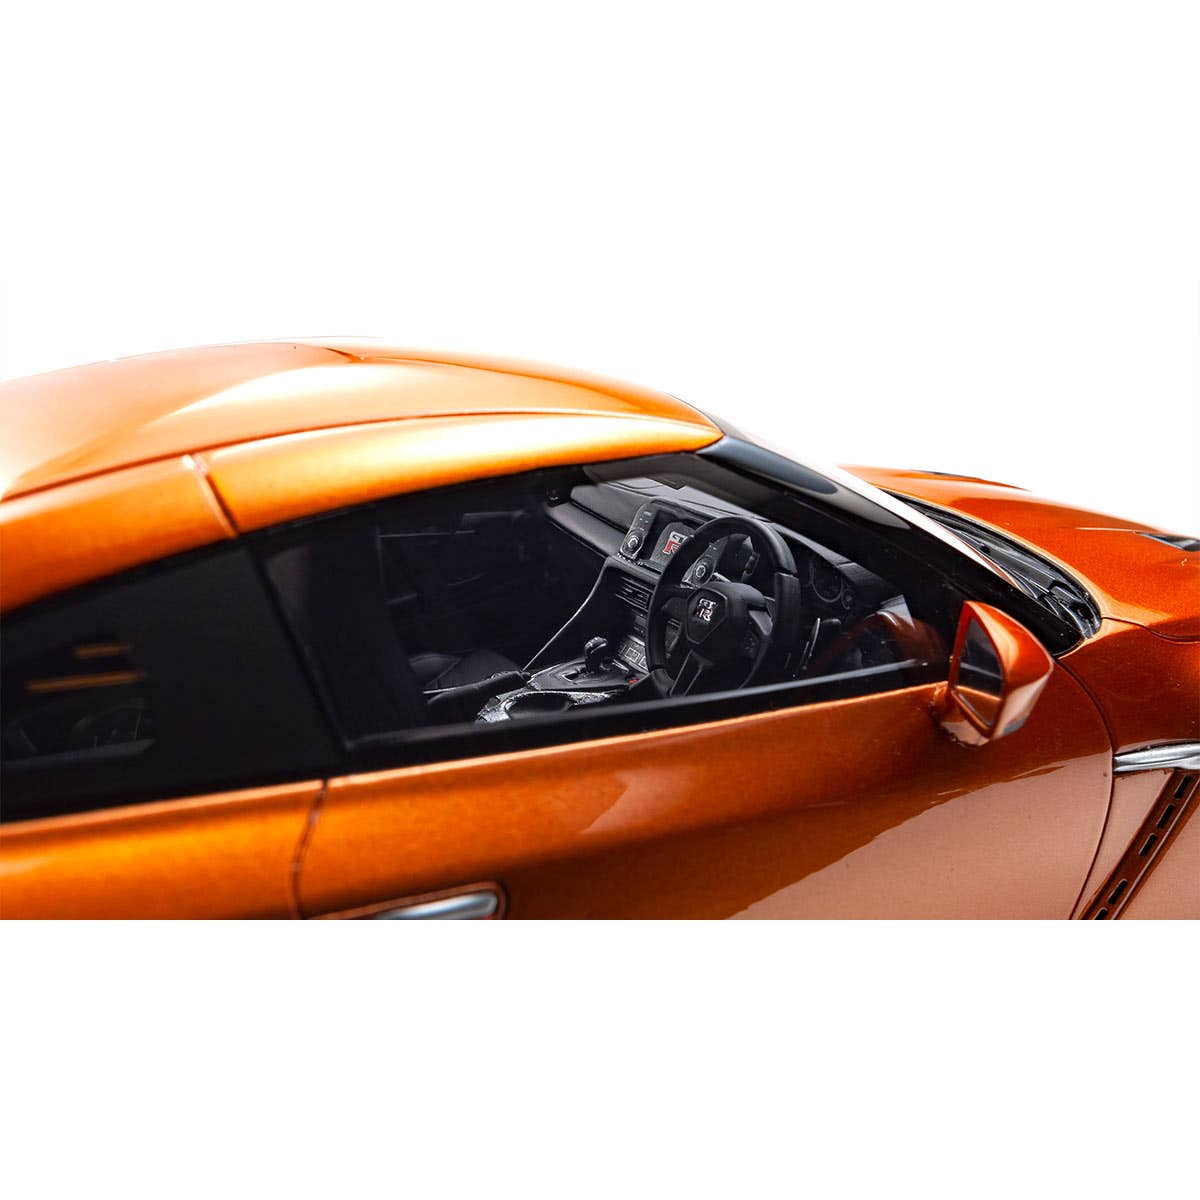 Nissan GT-R  2020 - Orange - 1:18 Scale Resin Model Car